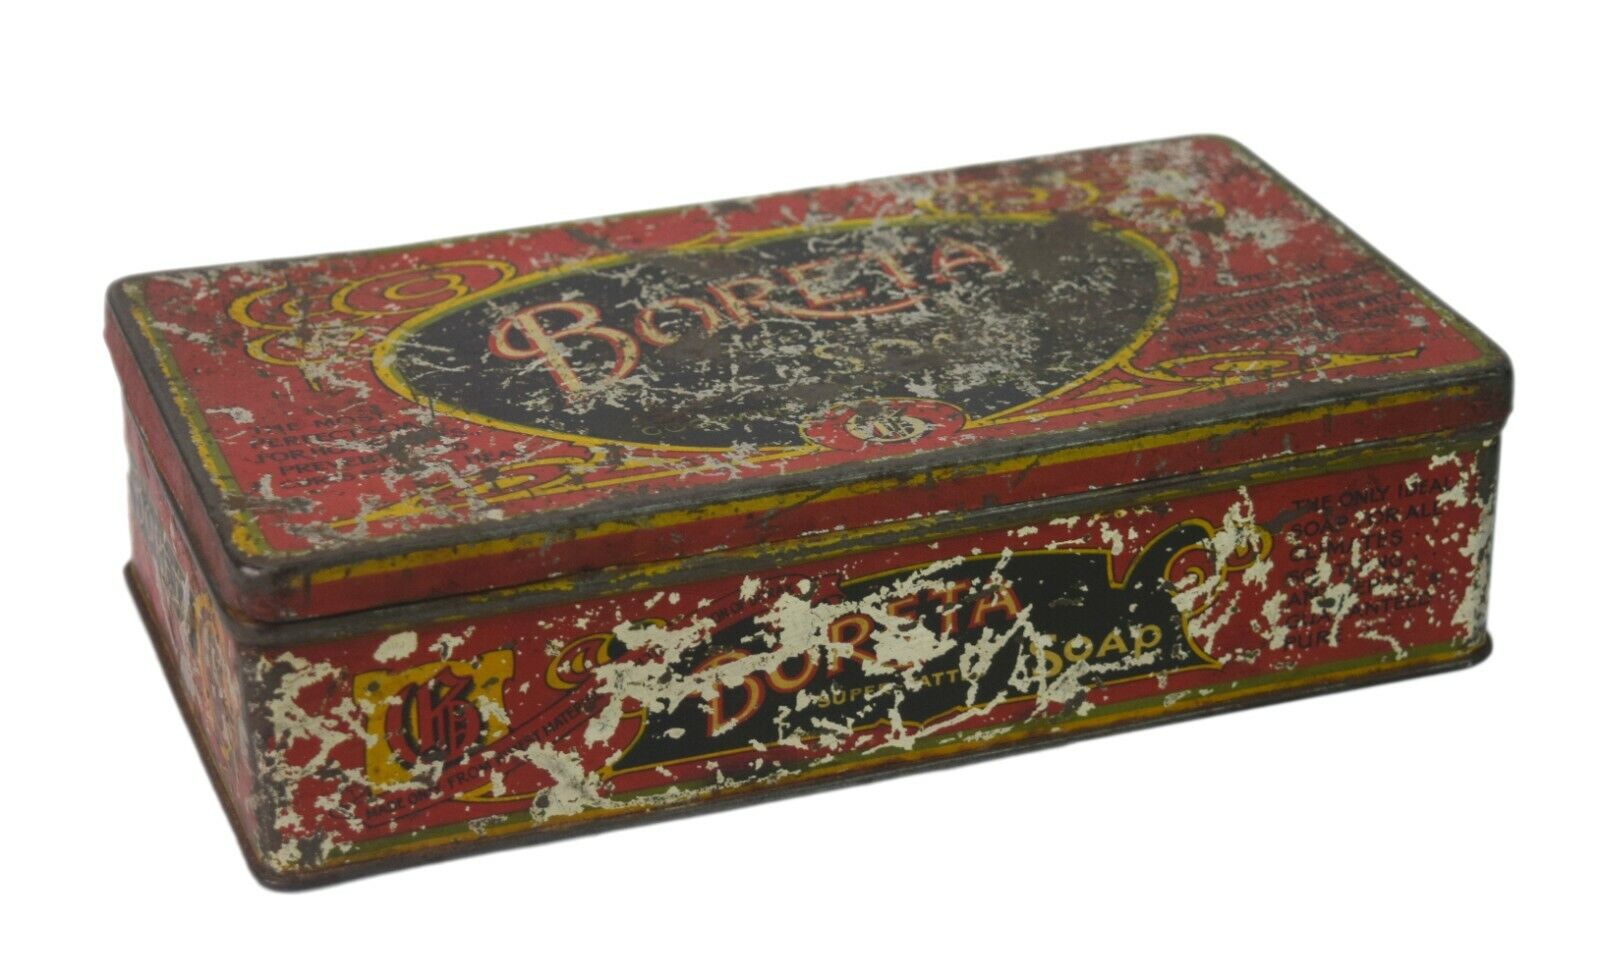 Made In England Vintage Boreta Soap Adv. Tin Box - Old Rare Empty Tin Box i2-399